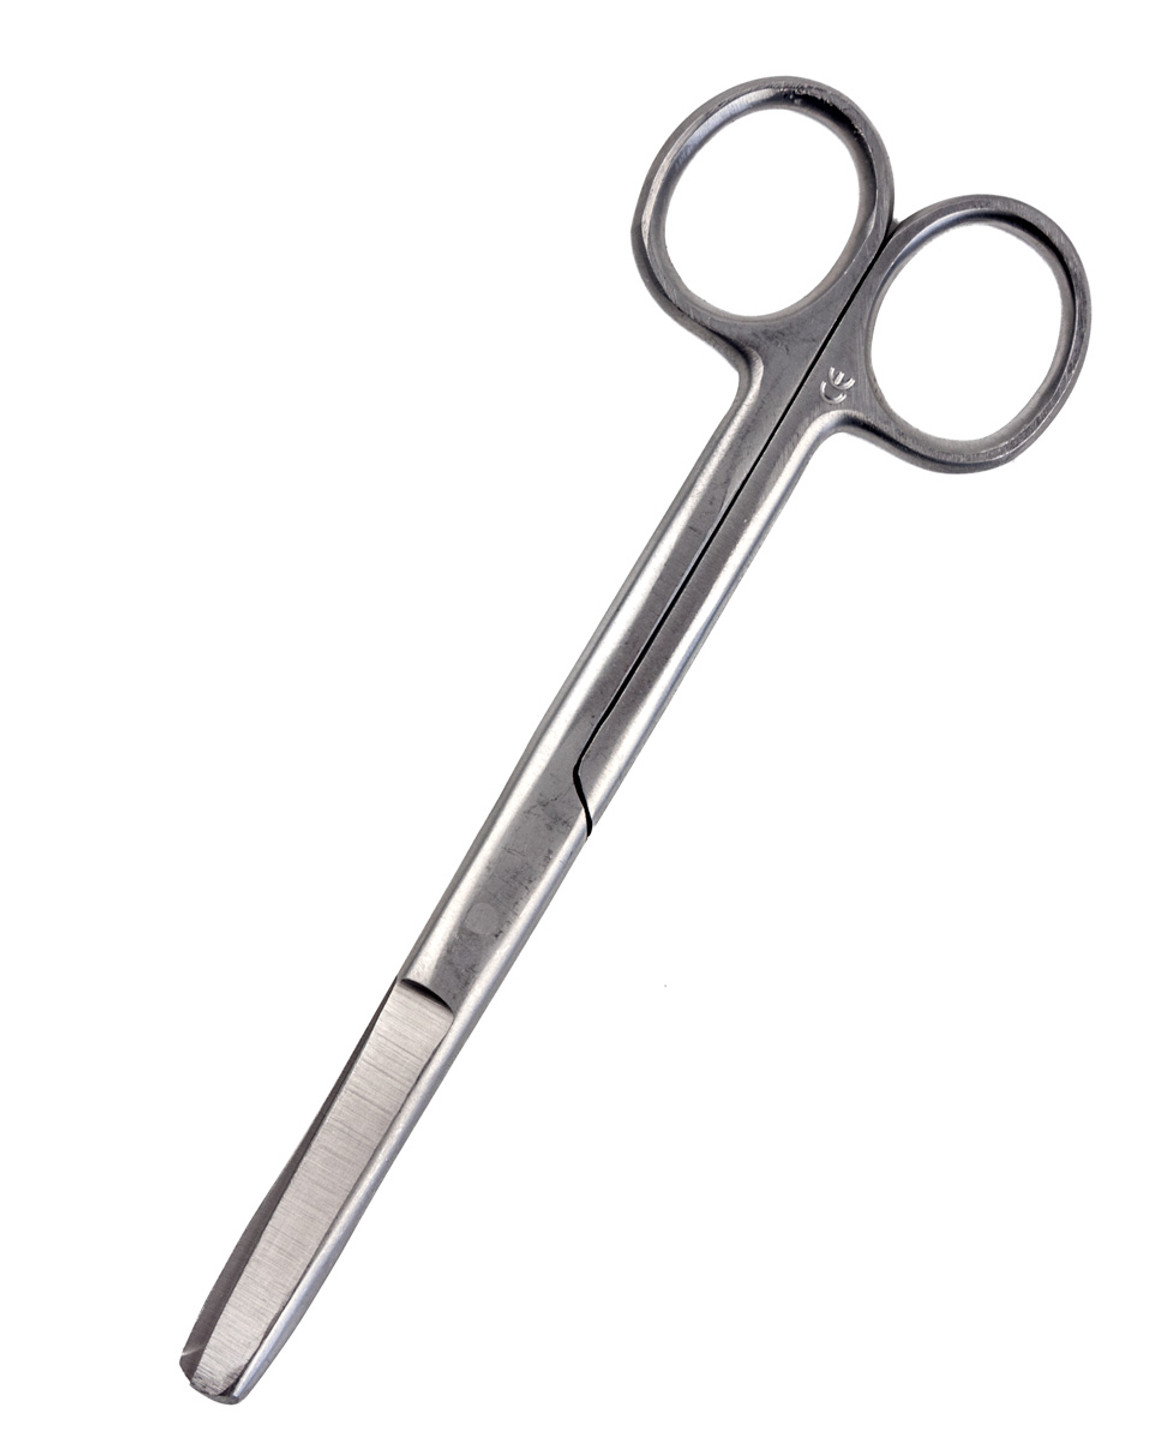 Stainless Steel Medical Scissors